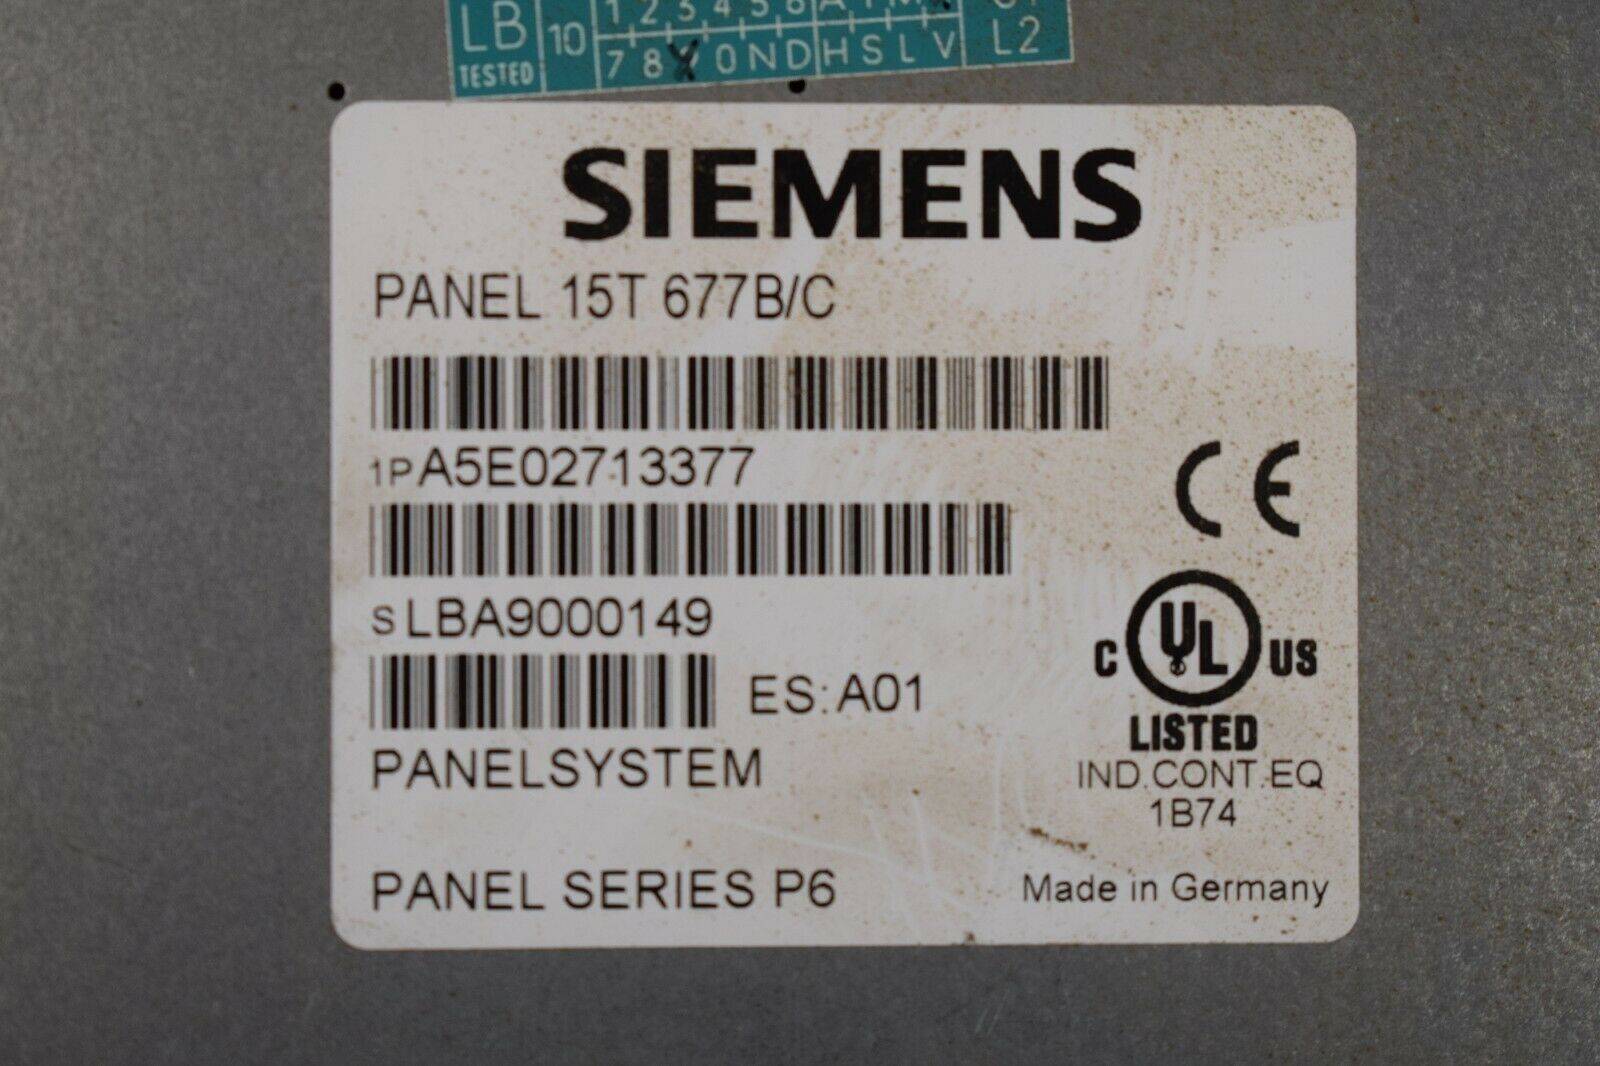 Siemens simatic Panel 15T 677B/C A5E02713377 Ver. A01